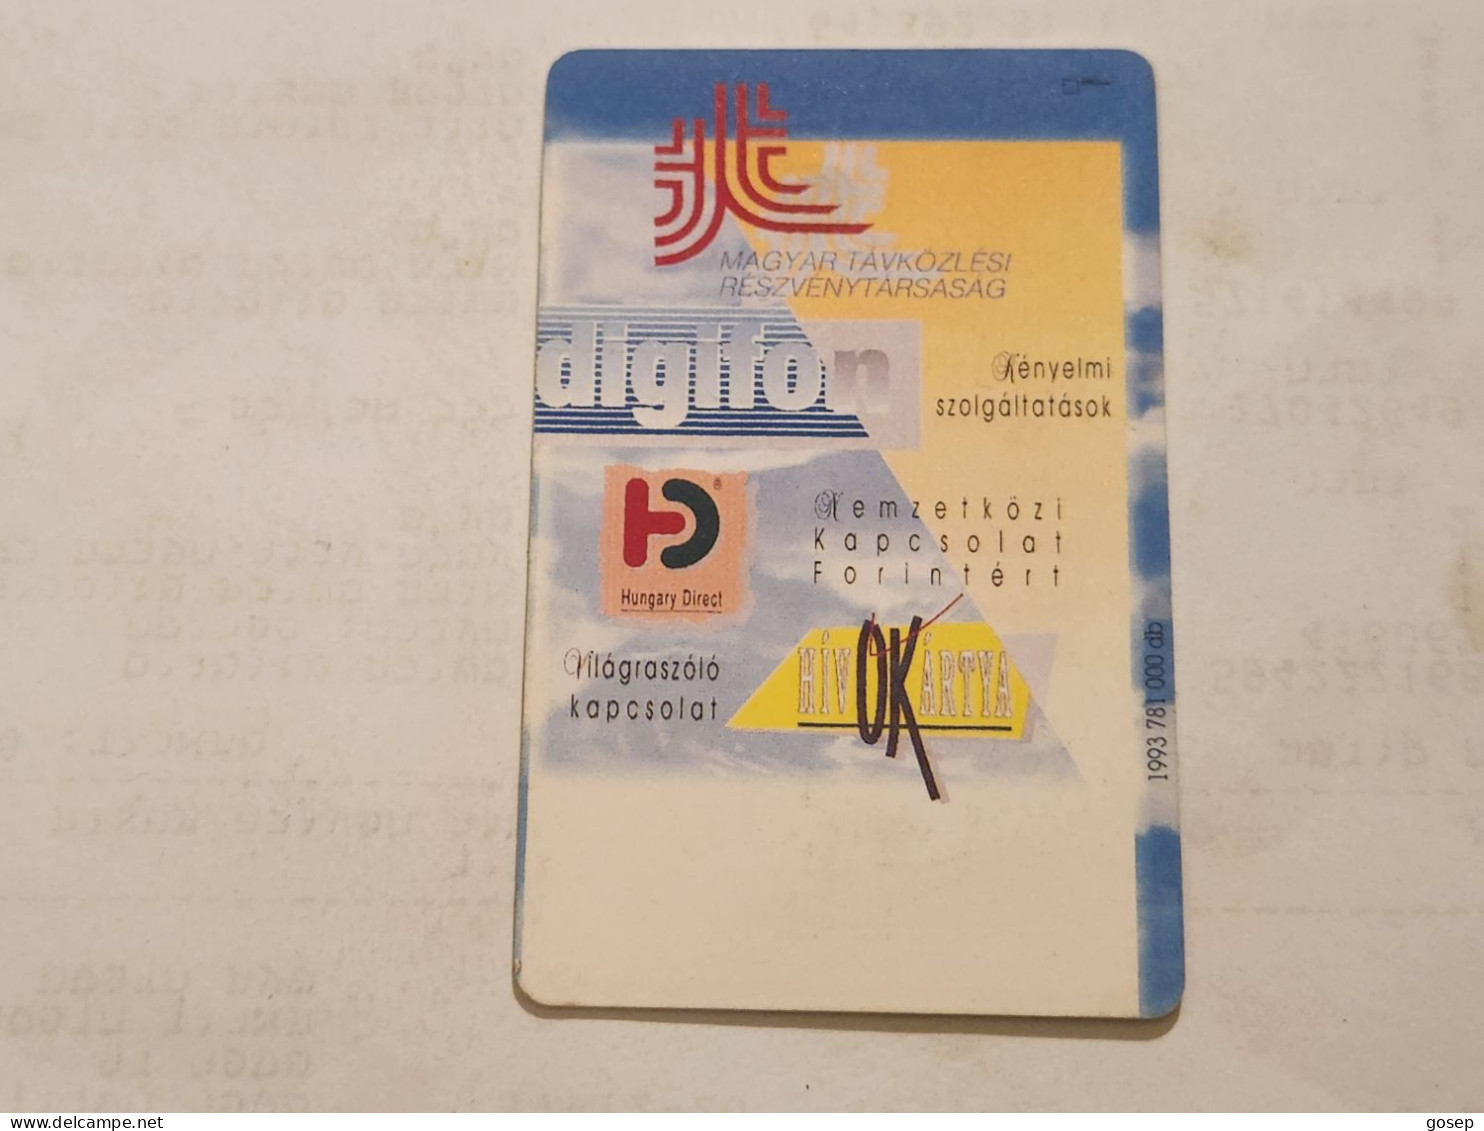 HUNGARY-(HU-P-1993-32Aa)-MATAV-(177)(500units)(11/93)(tirage-781.000)-USED CARD+1card Prepiad Free - Ungarn